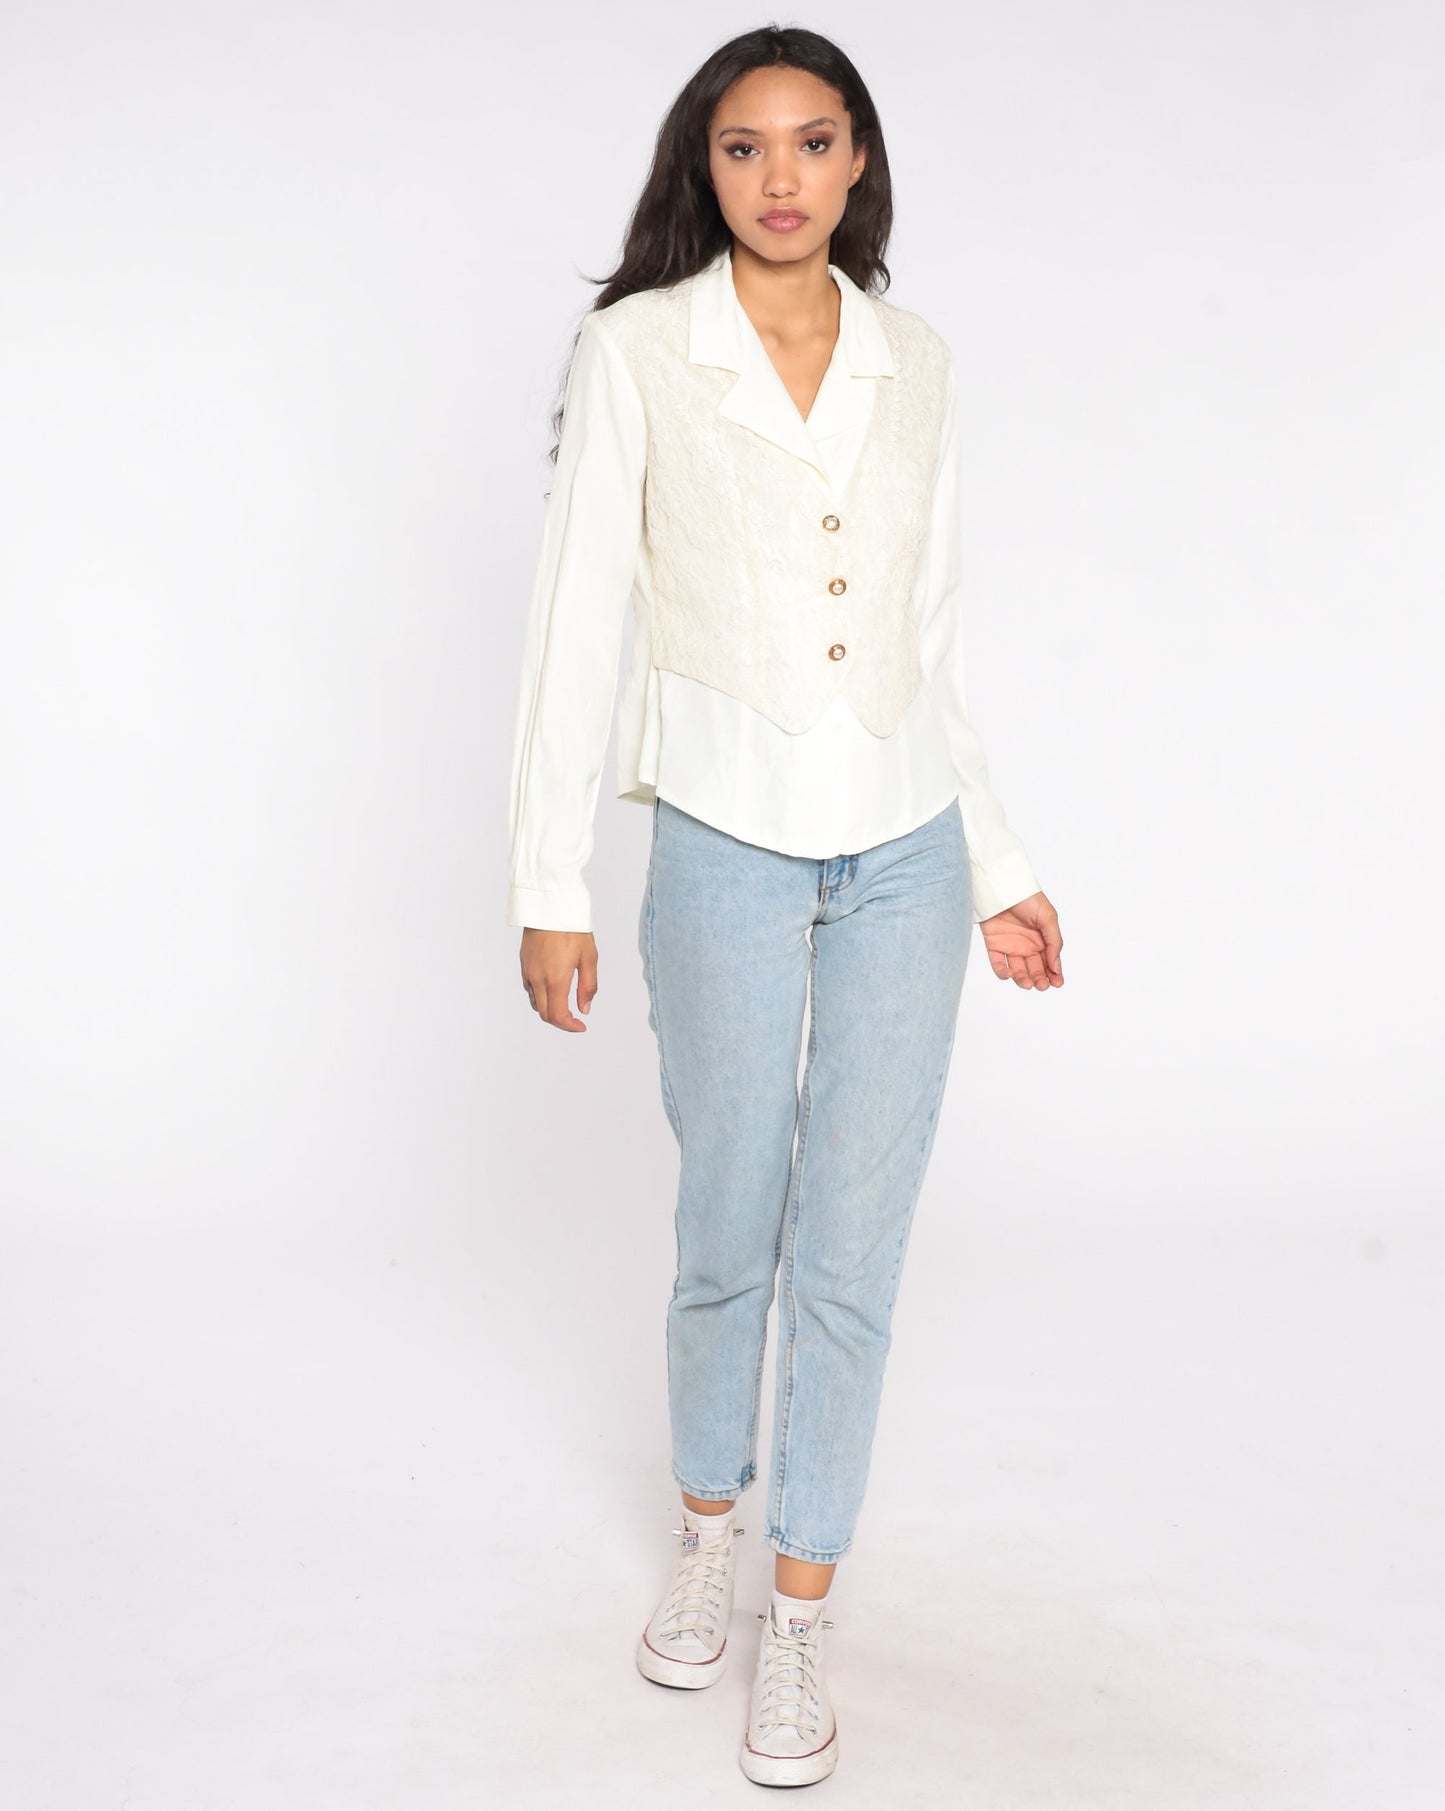 90s Off-White Blouse Attached Button Up Vest Lace Floral Shirt Victorian Long Sleeve Top Twofer Boho 1990s Romantic Vintage 2fer Medium M